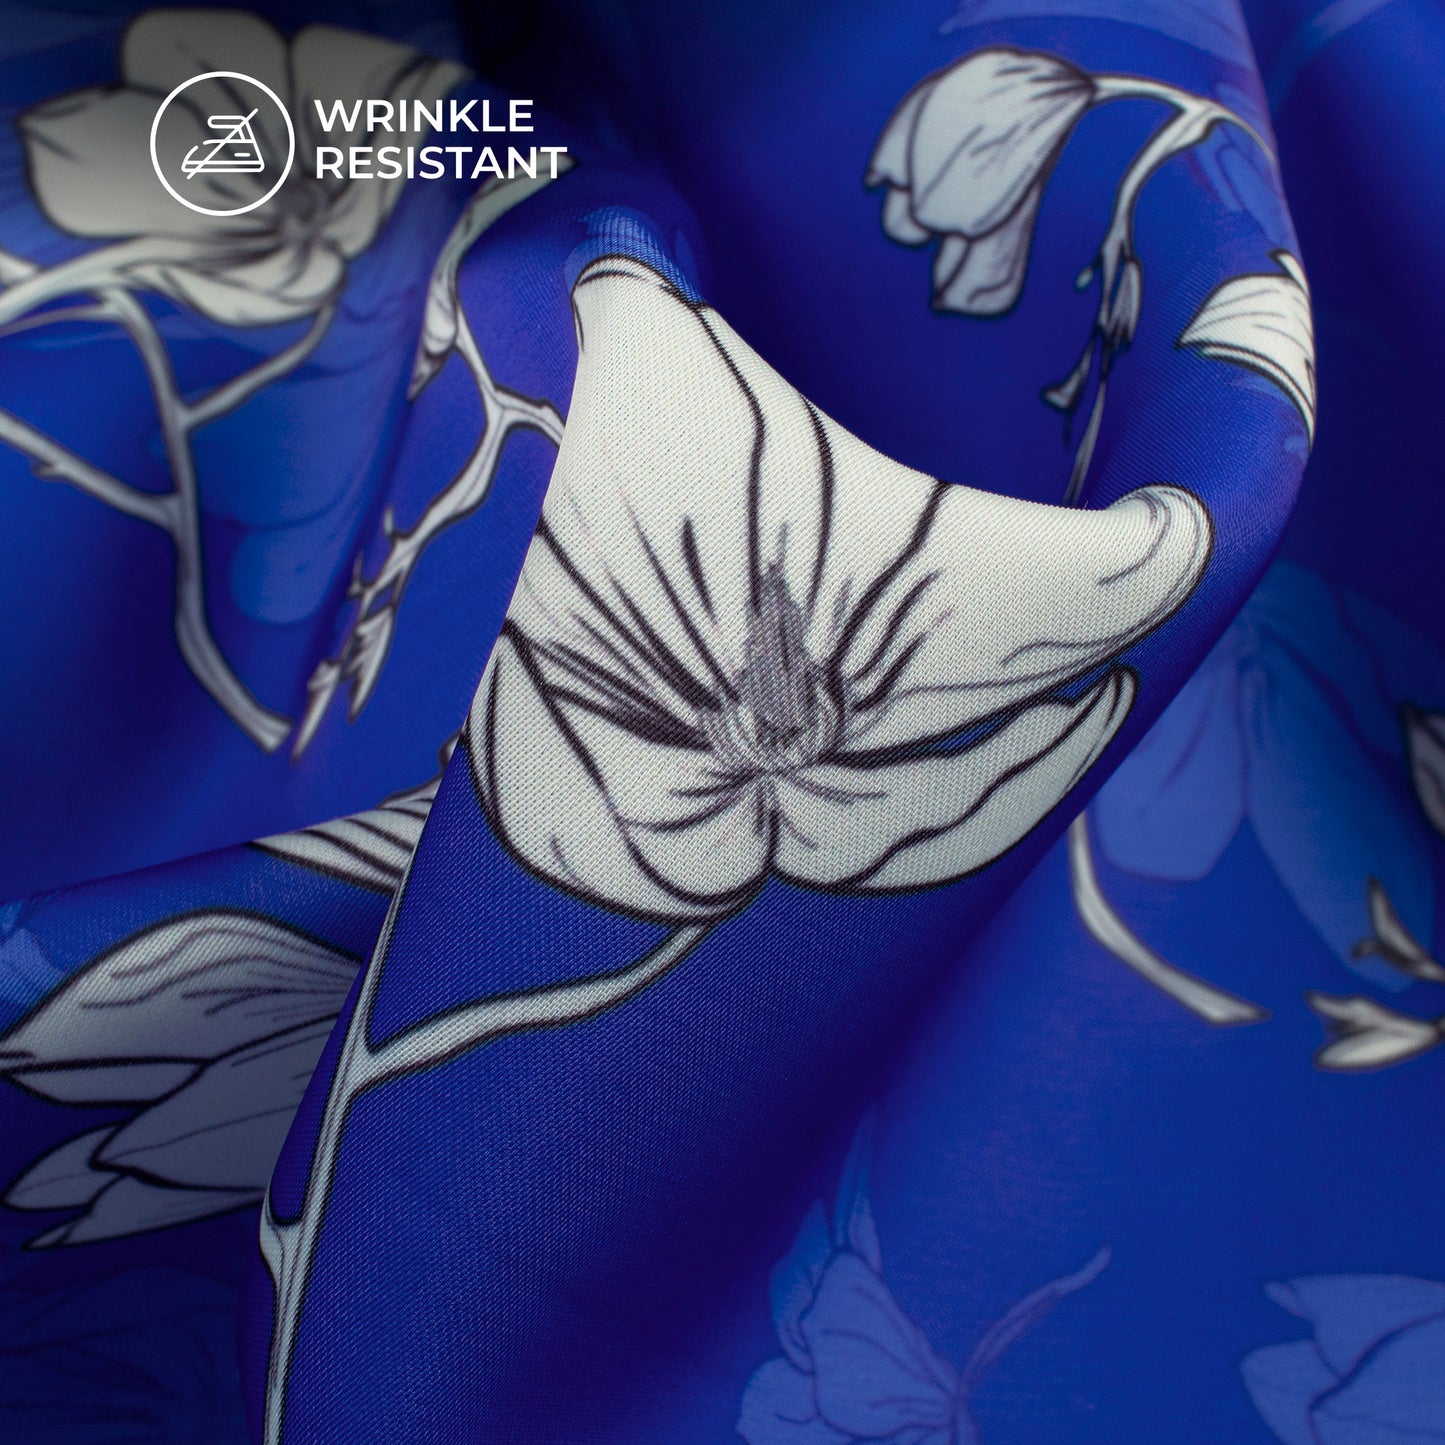 Royal Blue Floral Digital Print Imported Satin Fabric